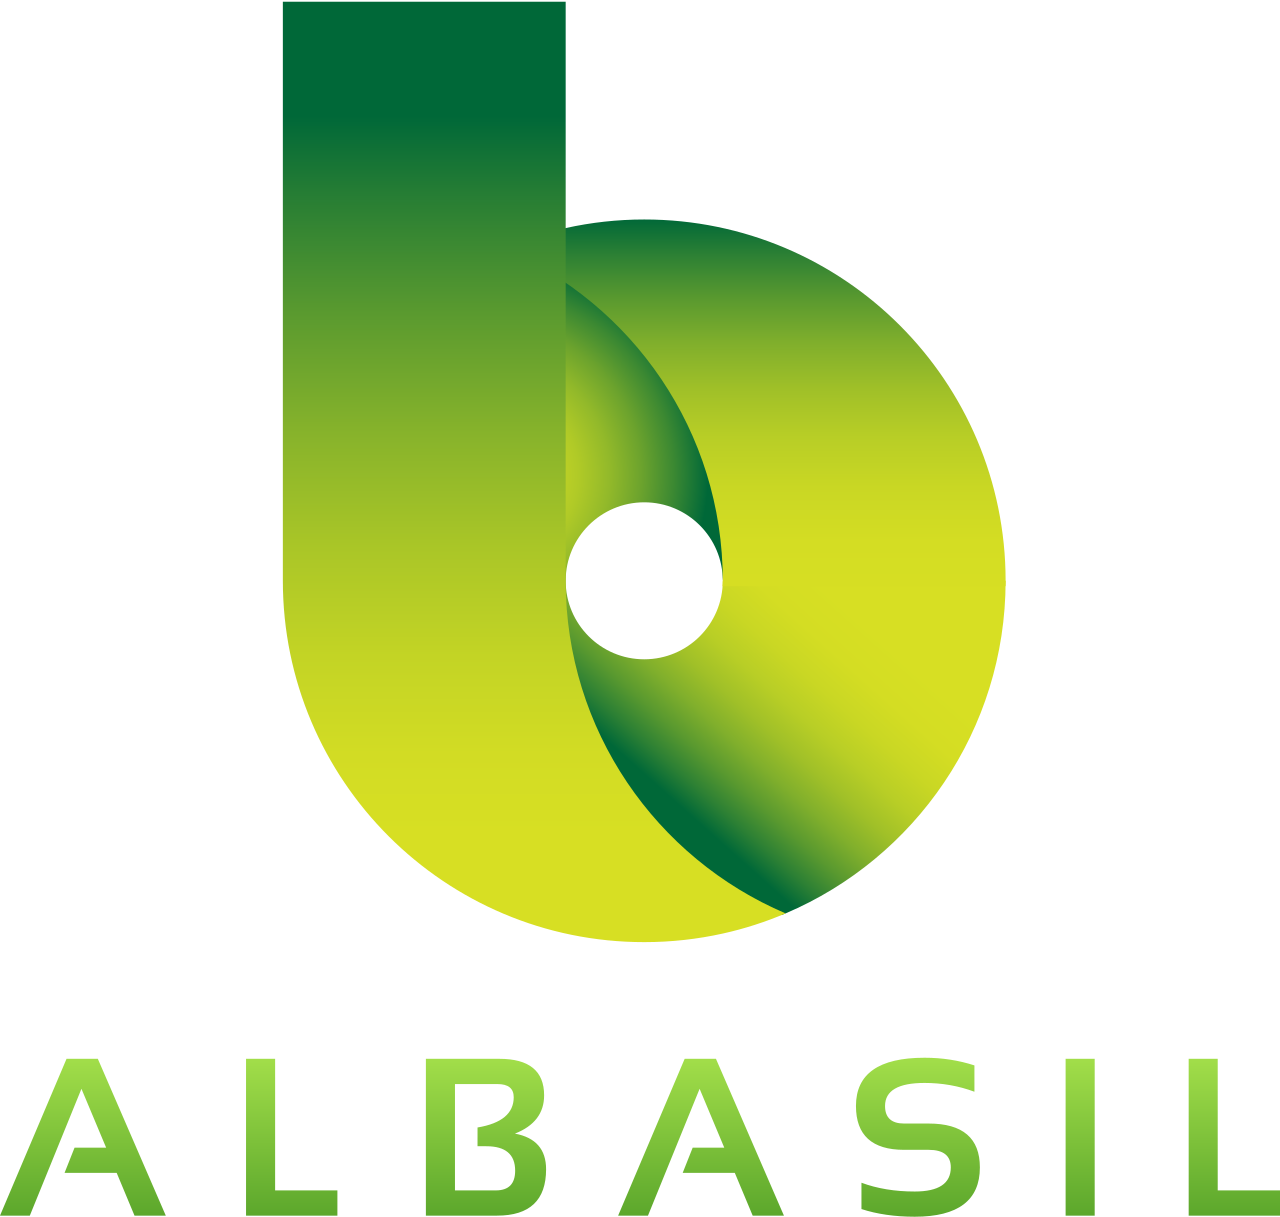 Albasil's logo